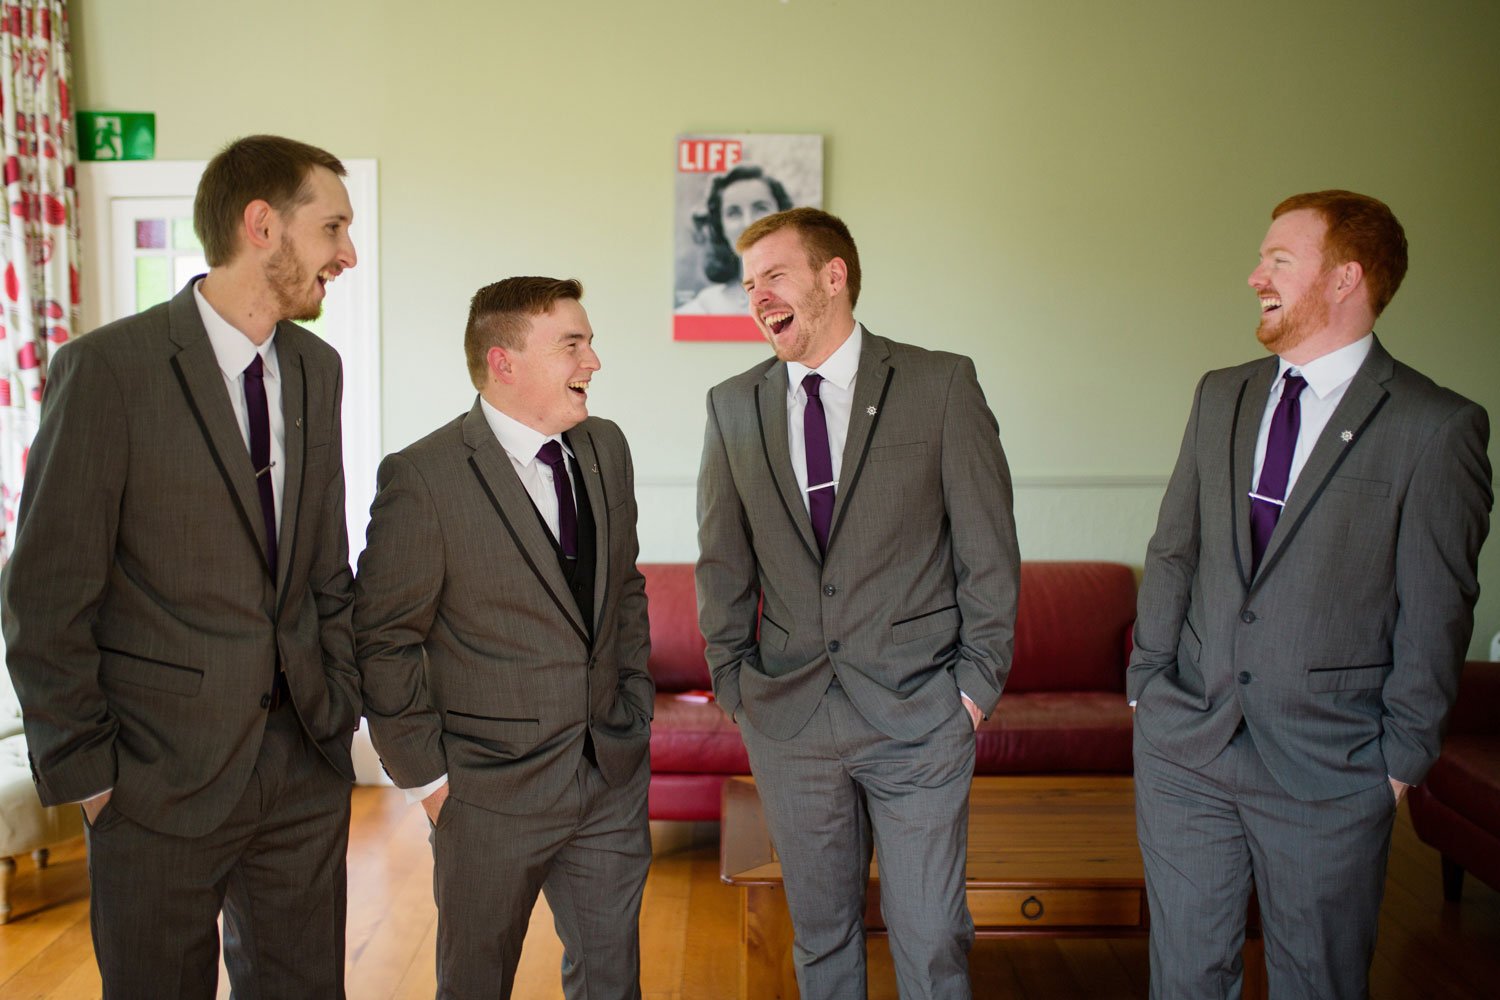 groomsmen having a laugh